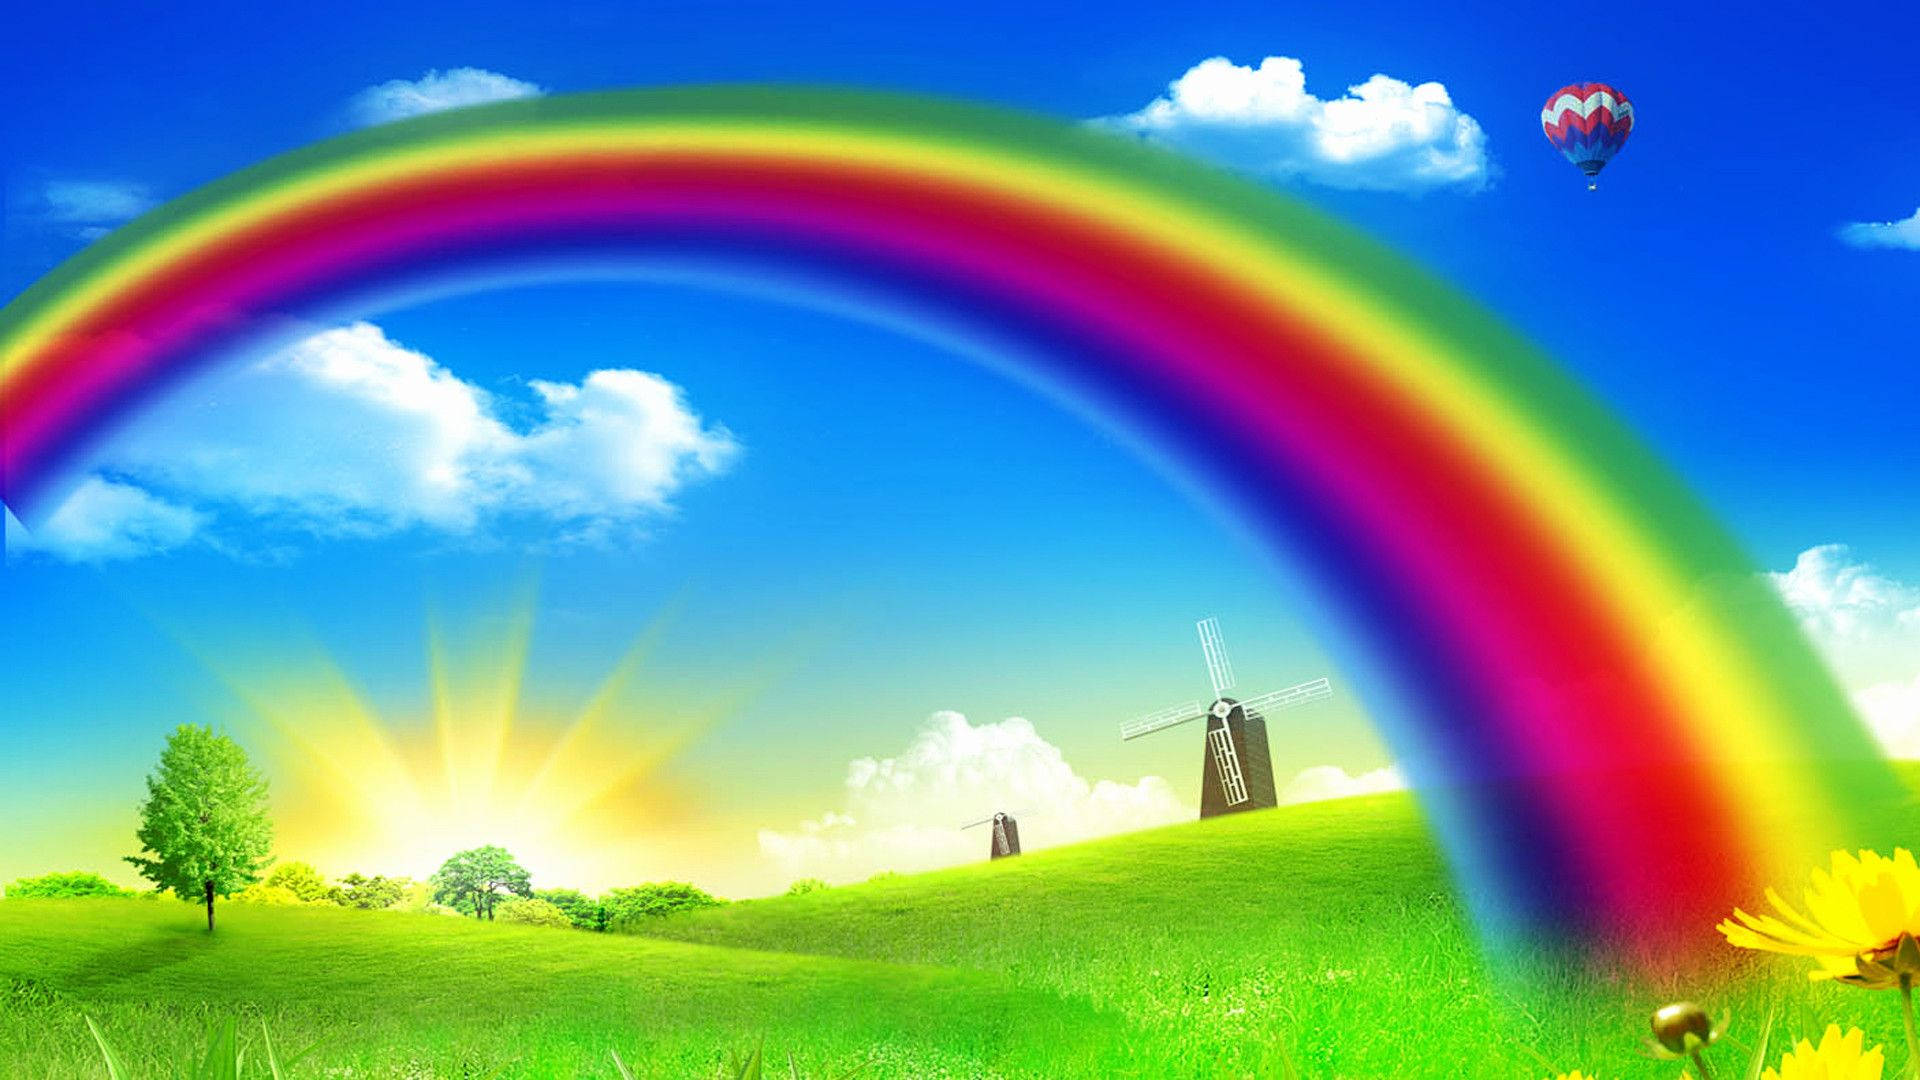 Animated Rainbow In Farm Background